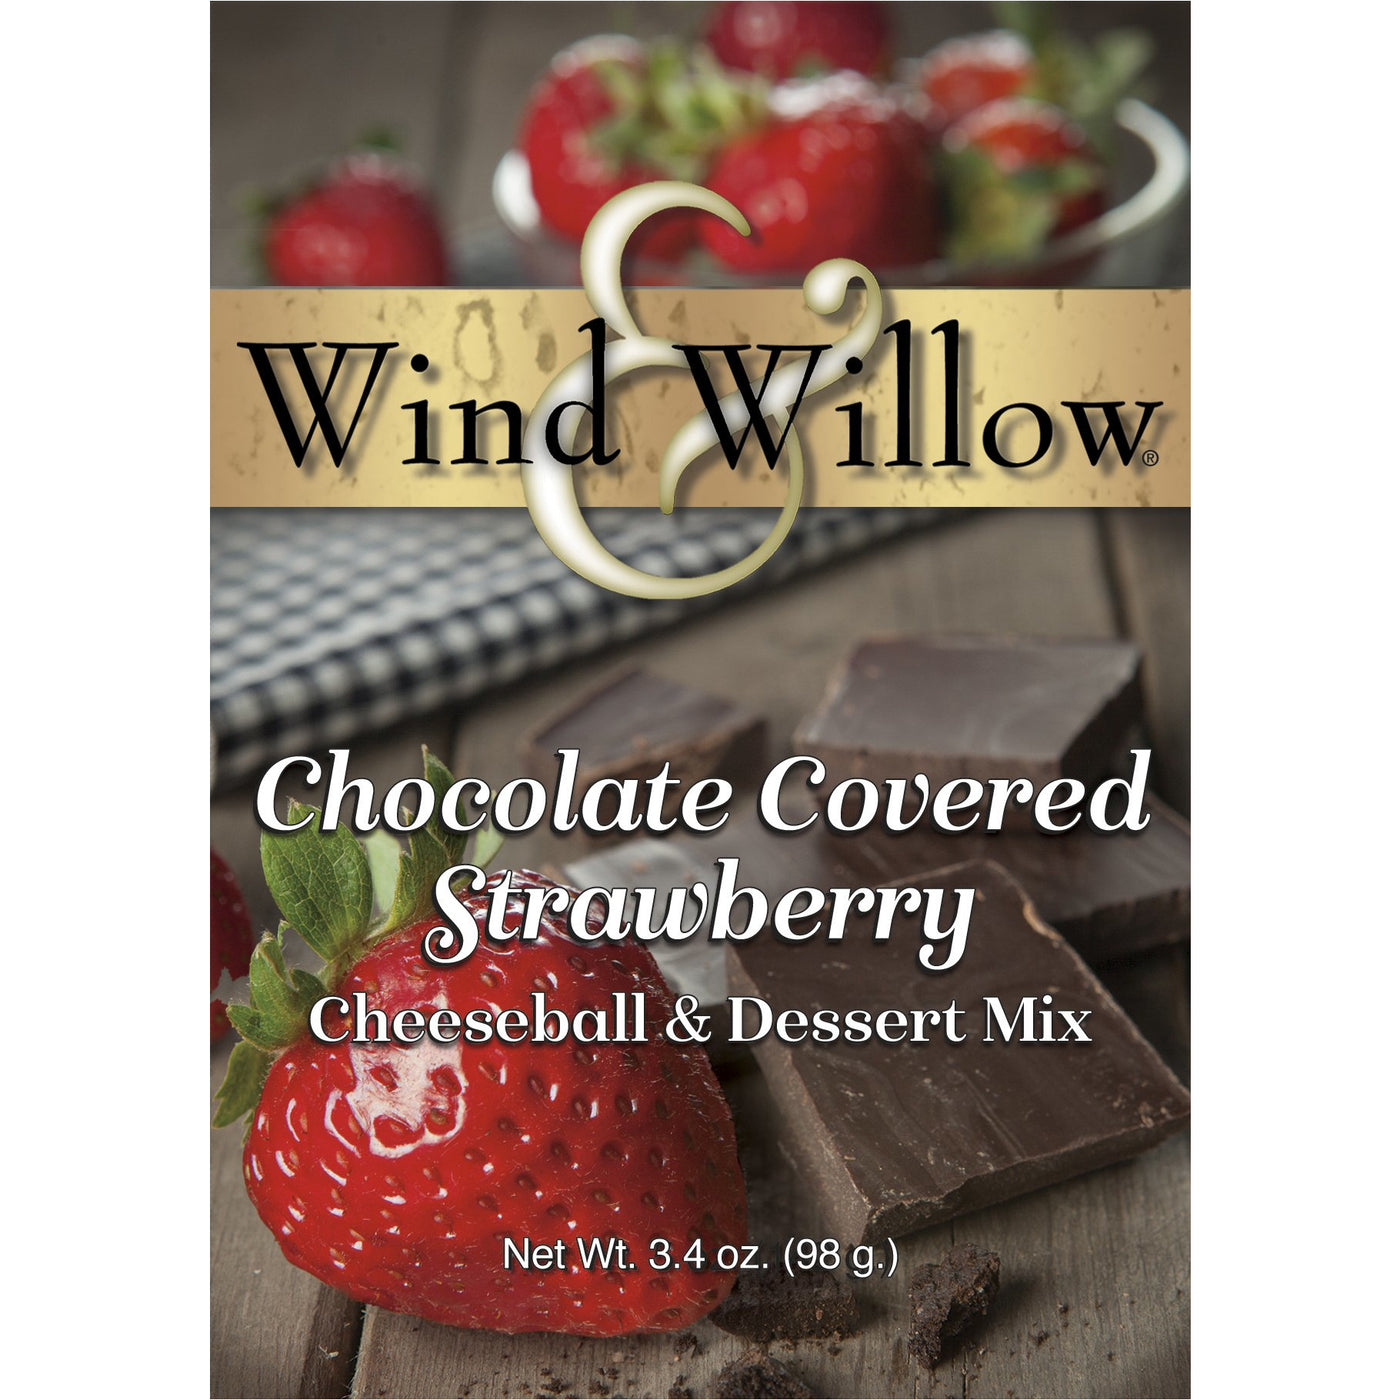 Chocolate Covered Strawberry Cheeseball & Dessert Mix by Wind & Willow - Smockingbird's